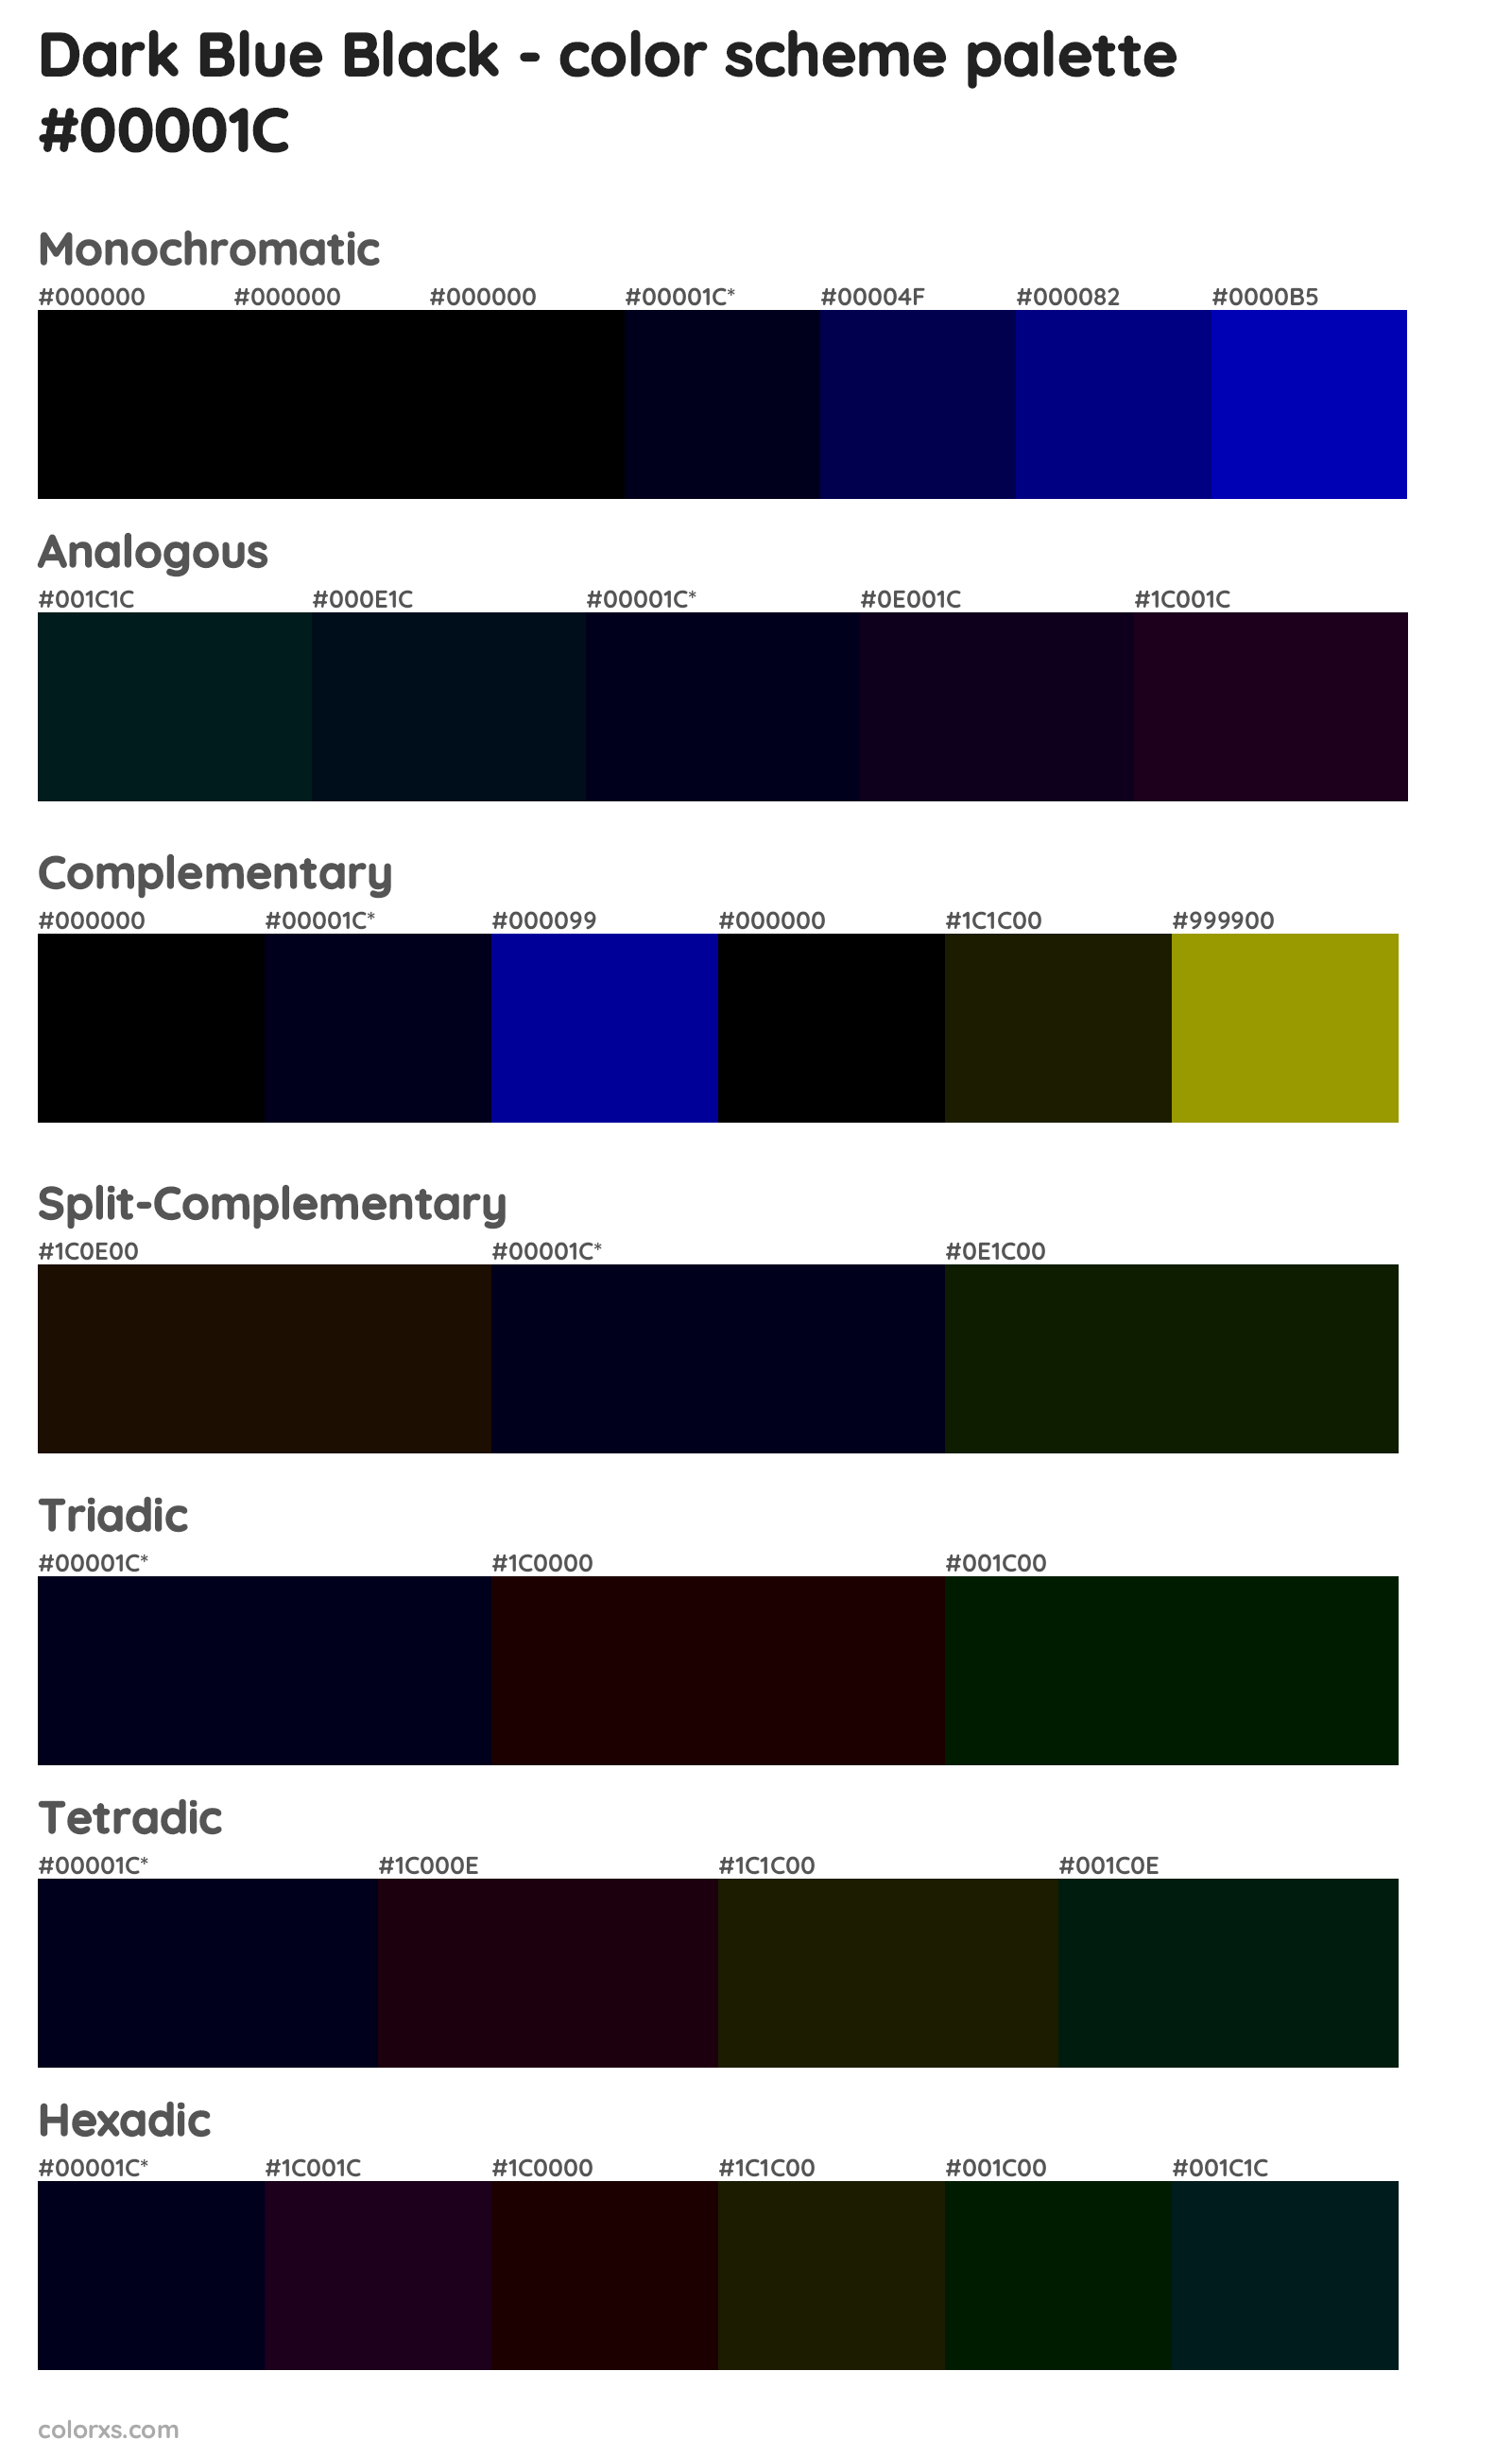 Dark Blue Black Color Scheme Palettes